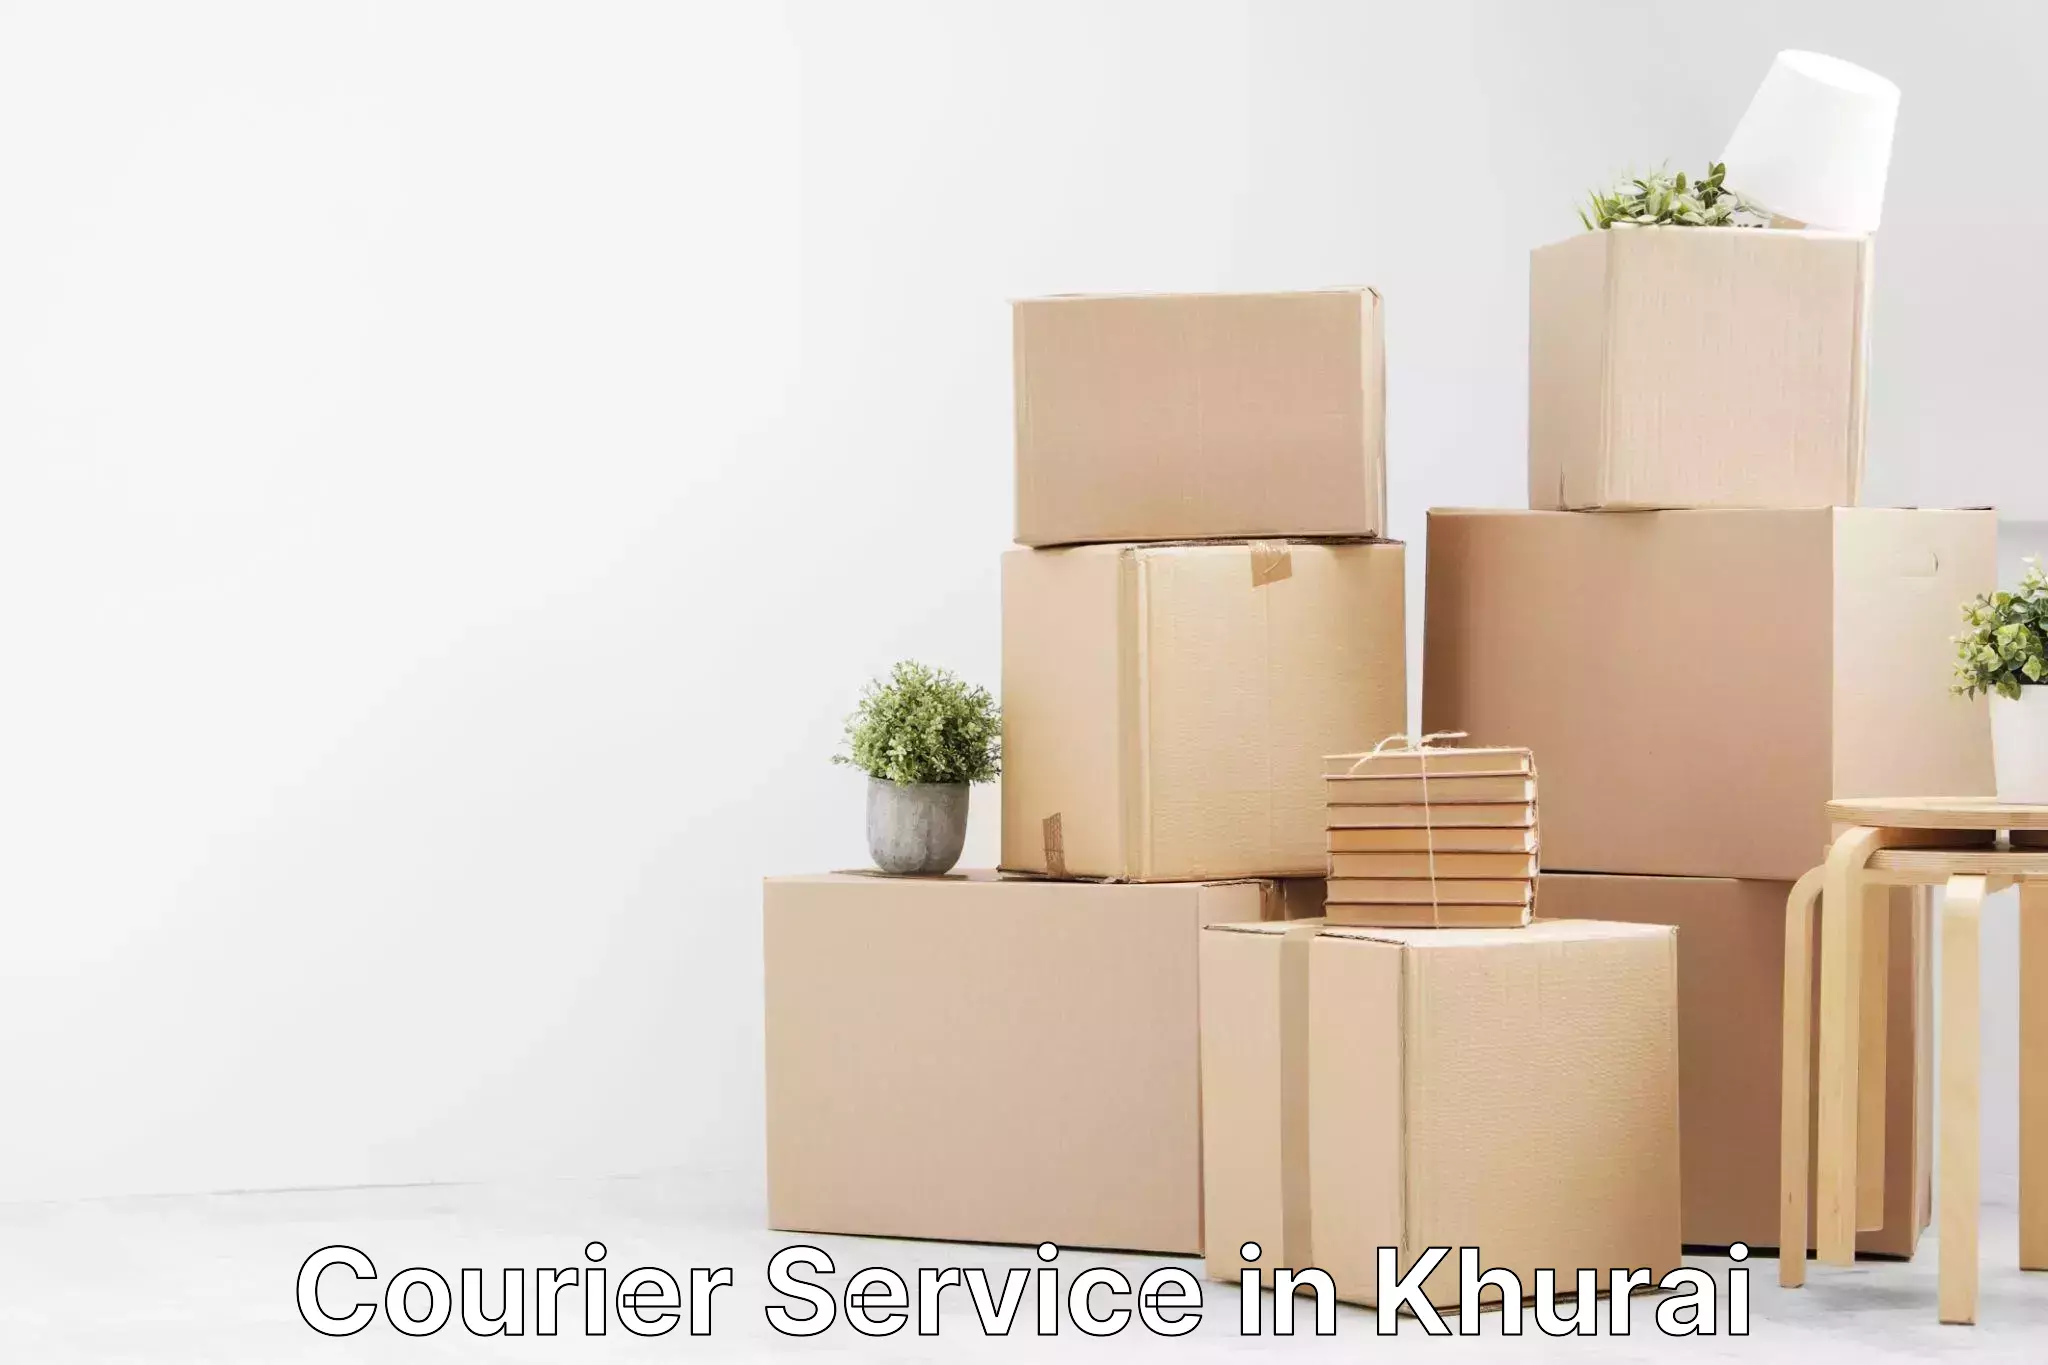 Reliable parcel services in Khurai